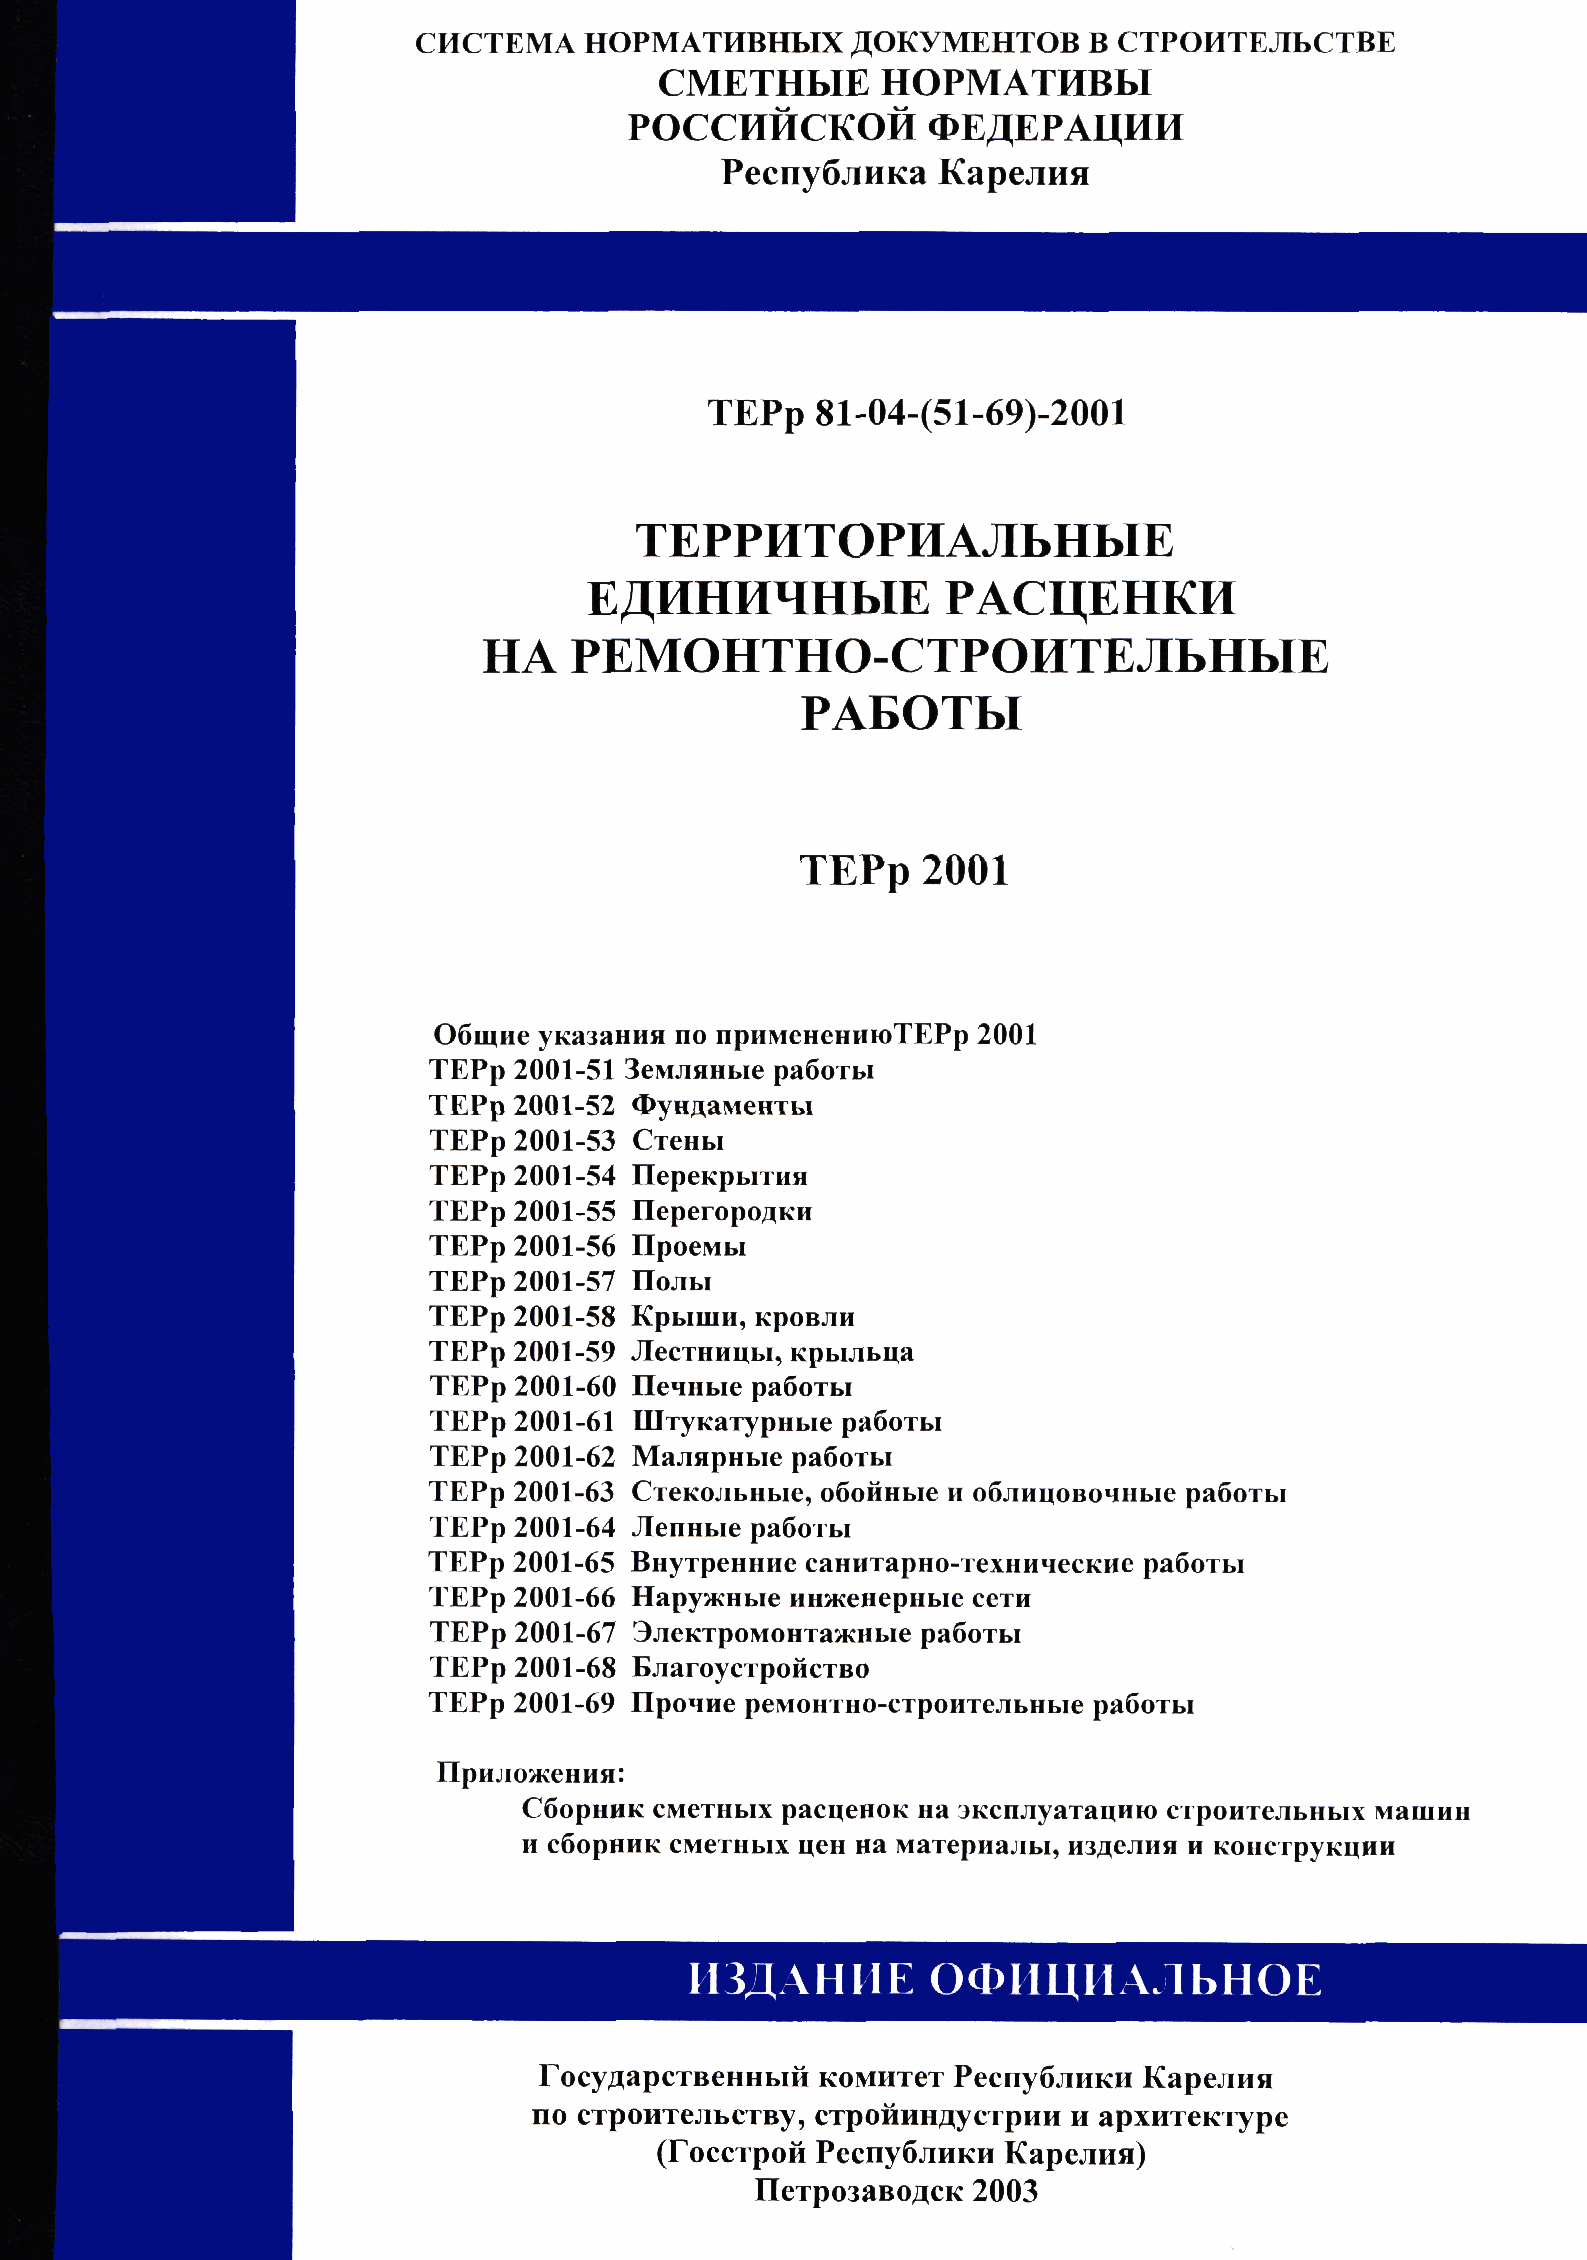 ТЕРр Республика Карелия 2001-61